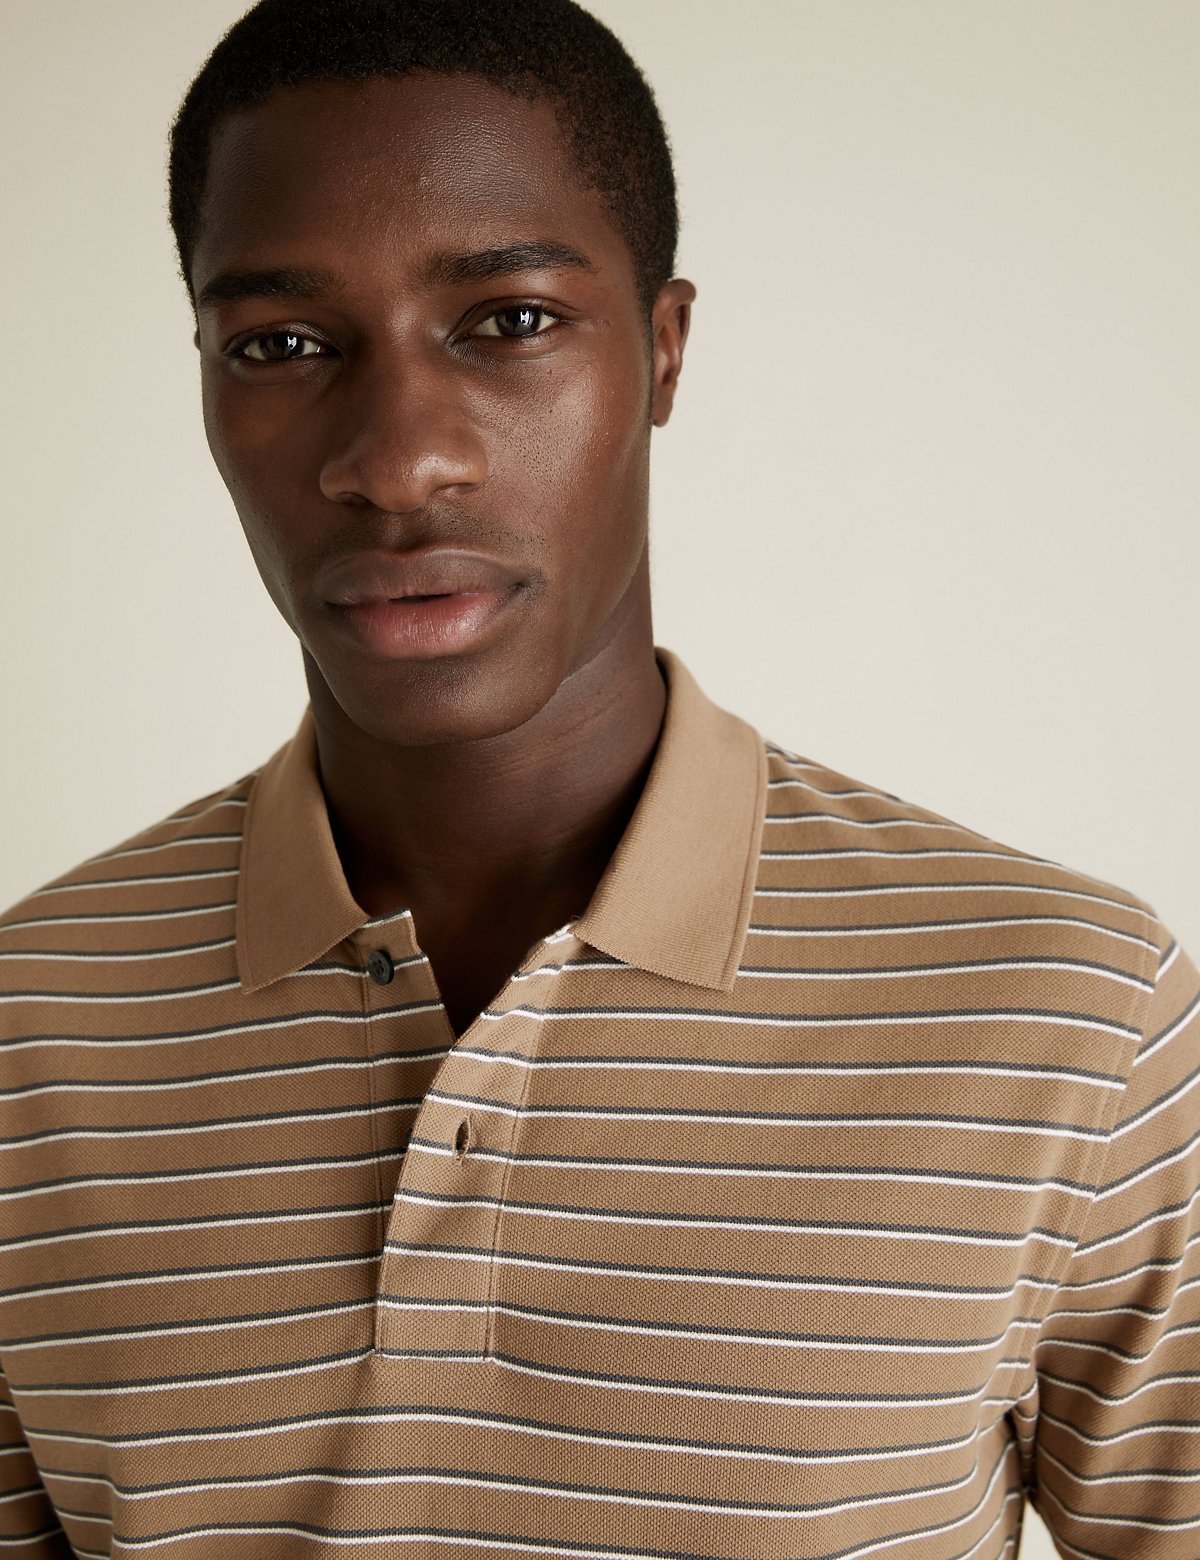 Pure Cotton Pique Striped Polo Shirt.